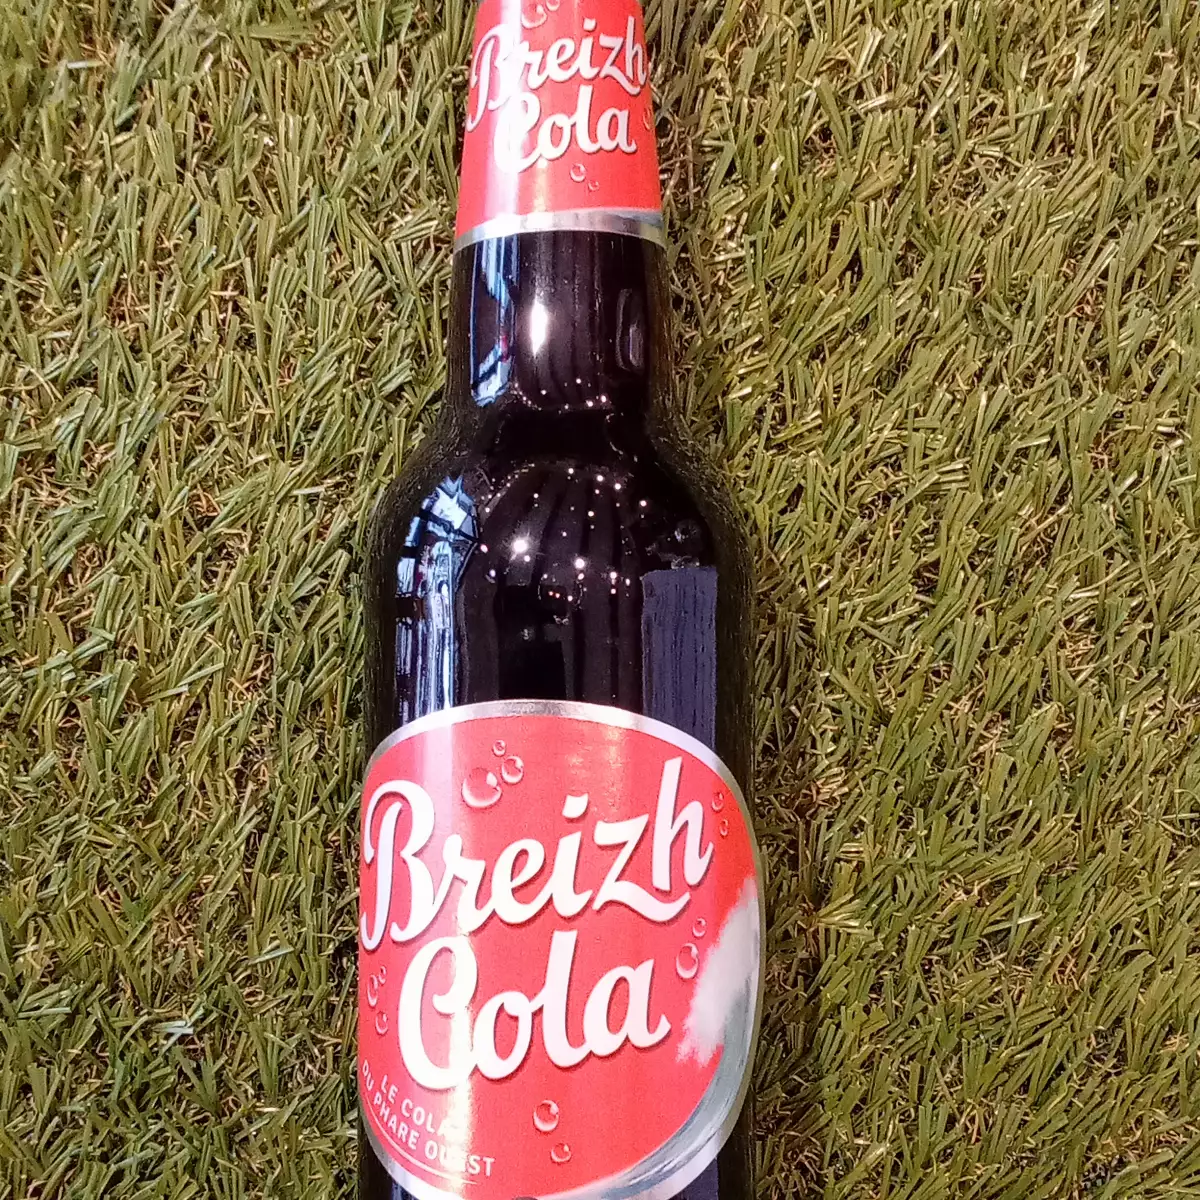 Breizh cola -